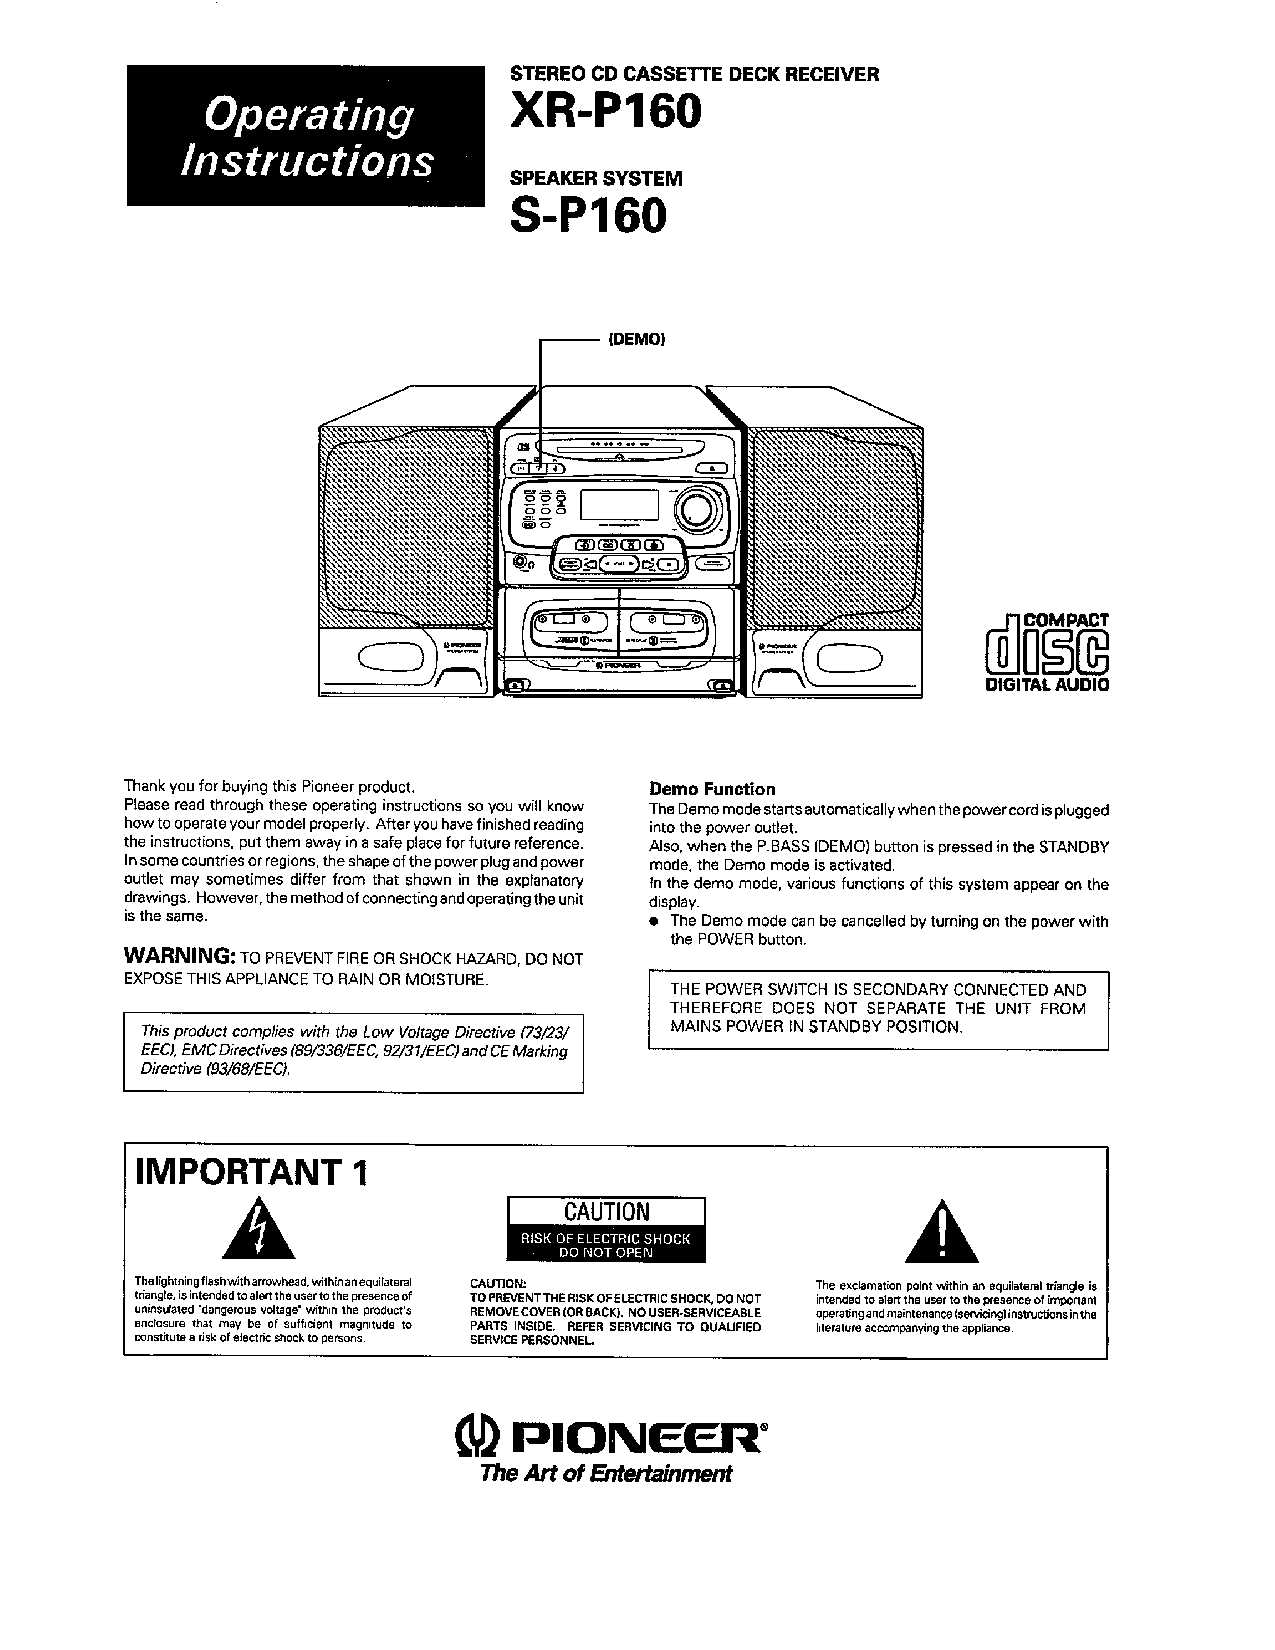 Pioneer S-P160, XR-P160 User Manual